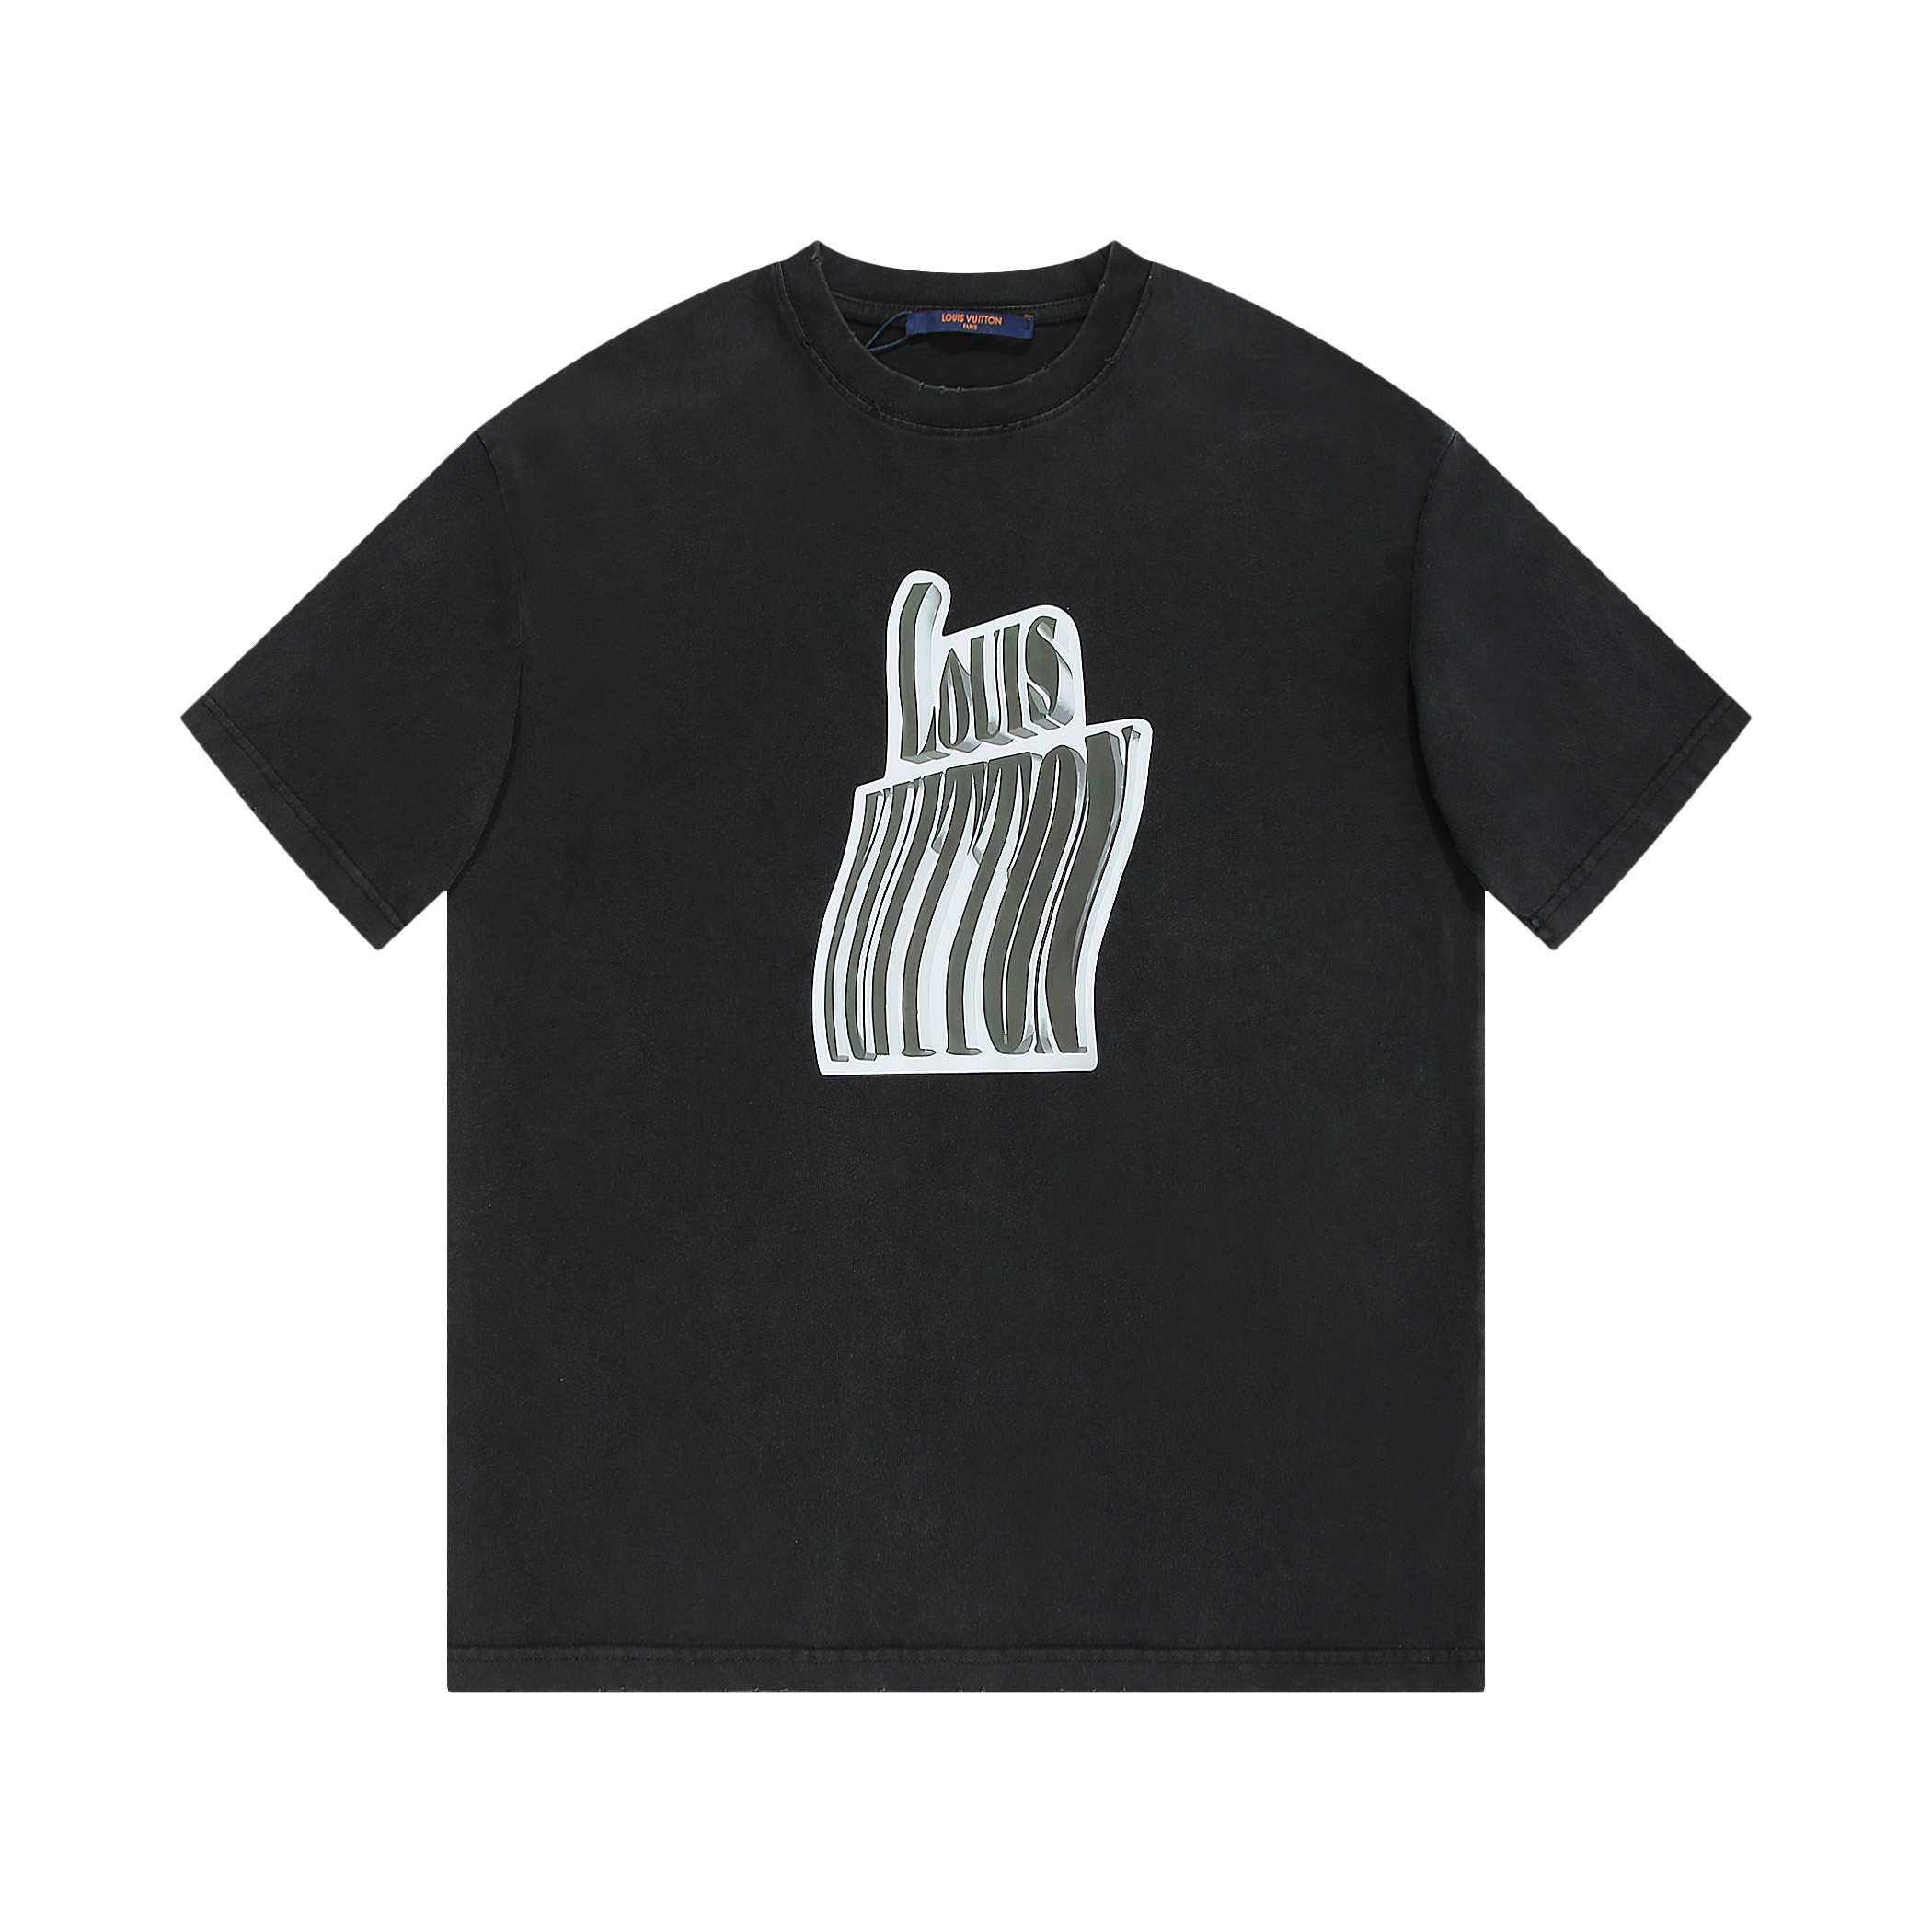 Louis Vuitton Clothing T-Shirt Black Printing Unisex Spring Collection Vintage